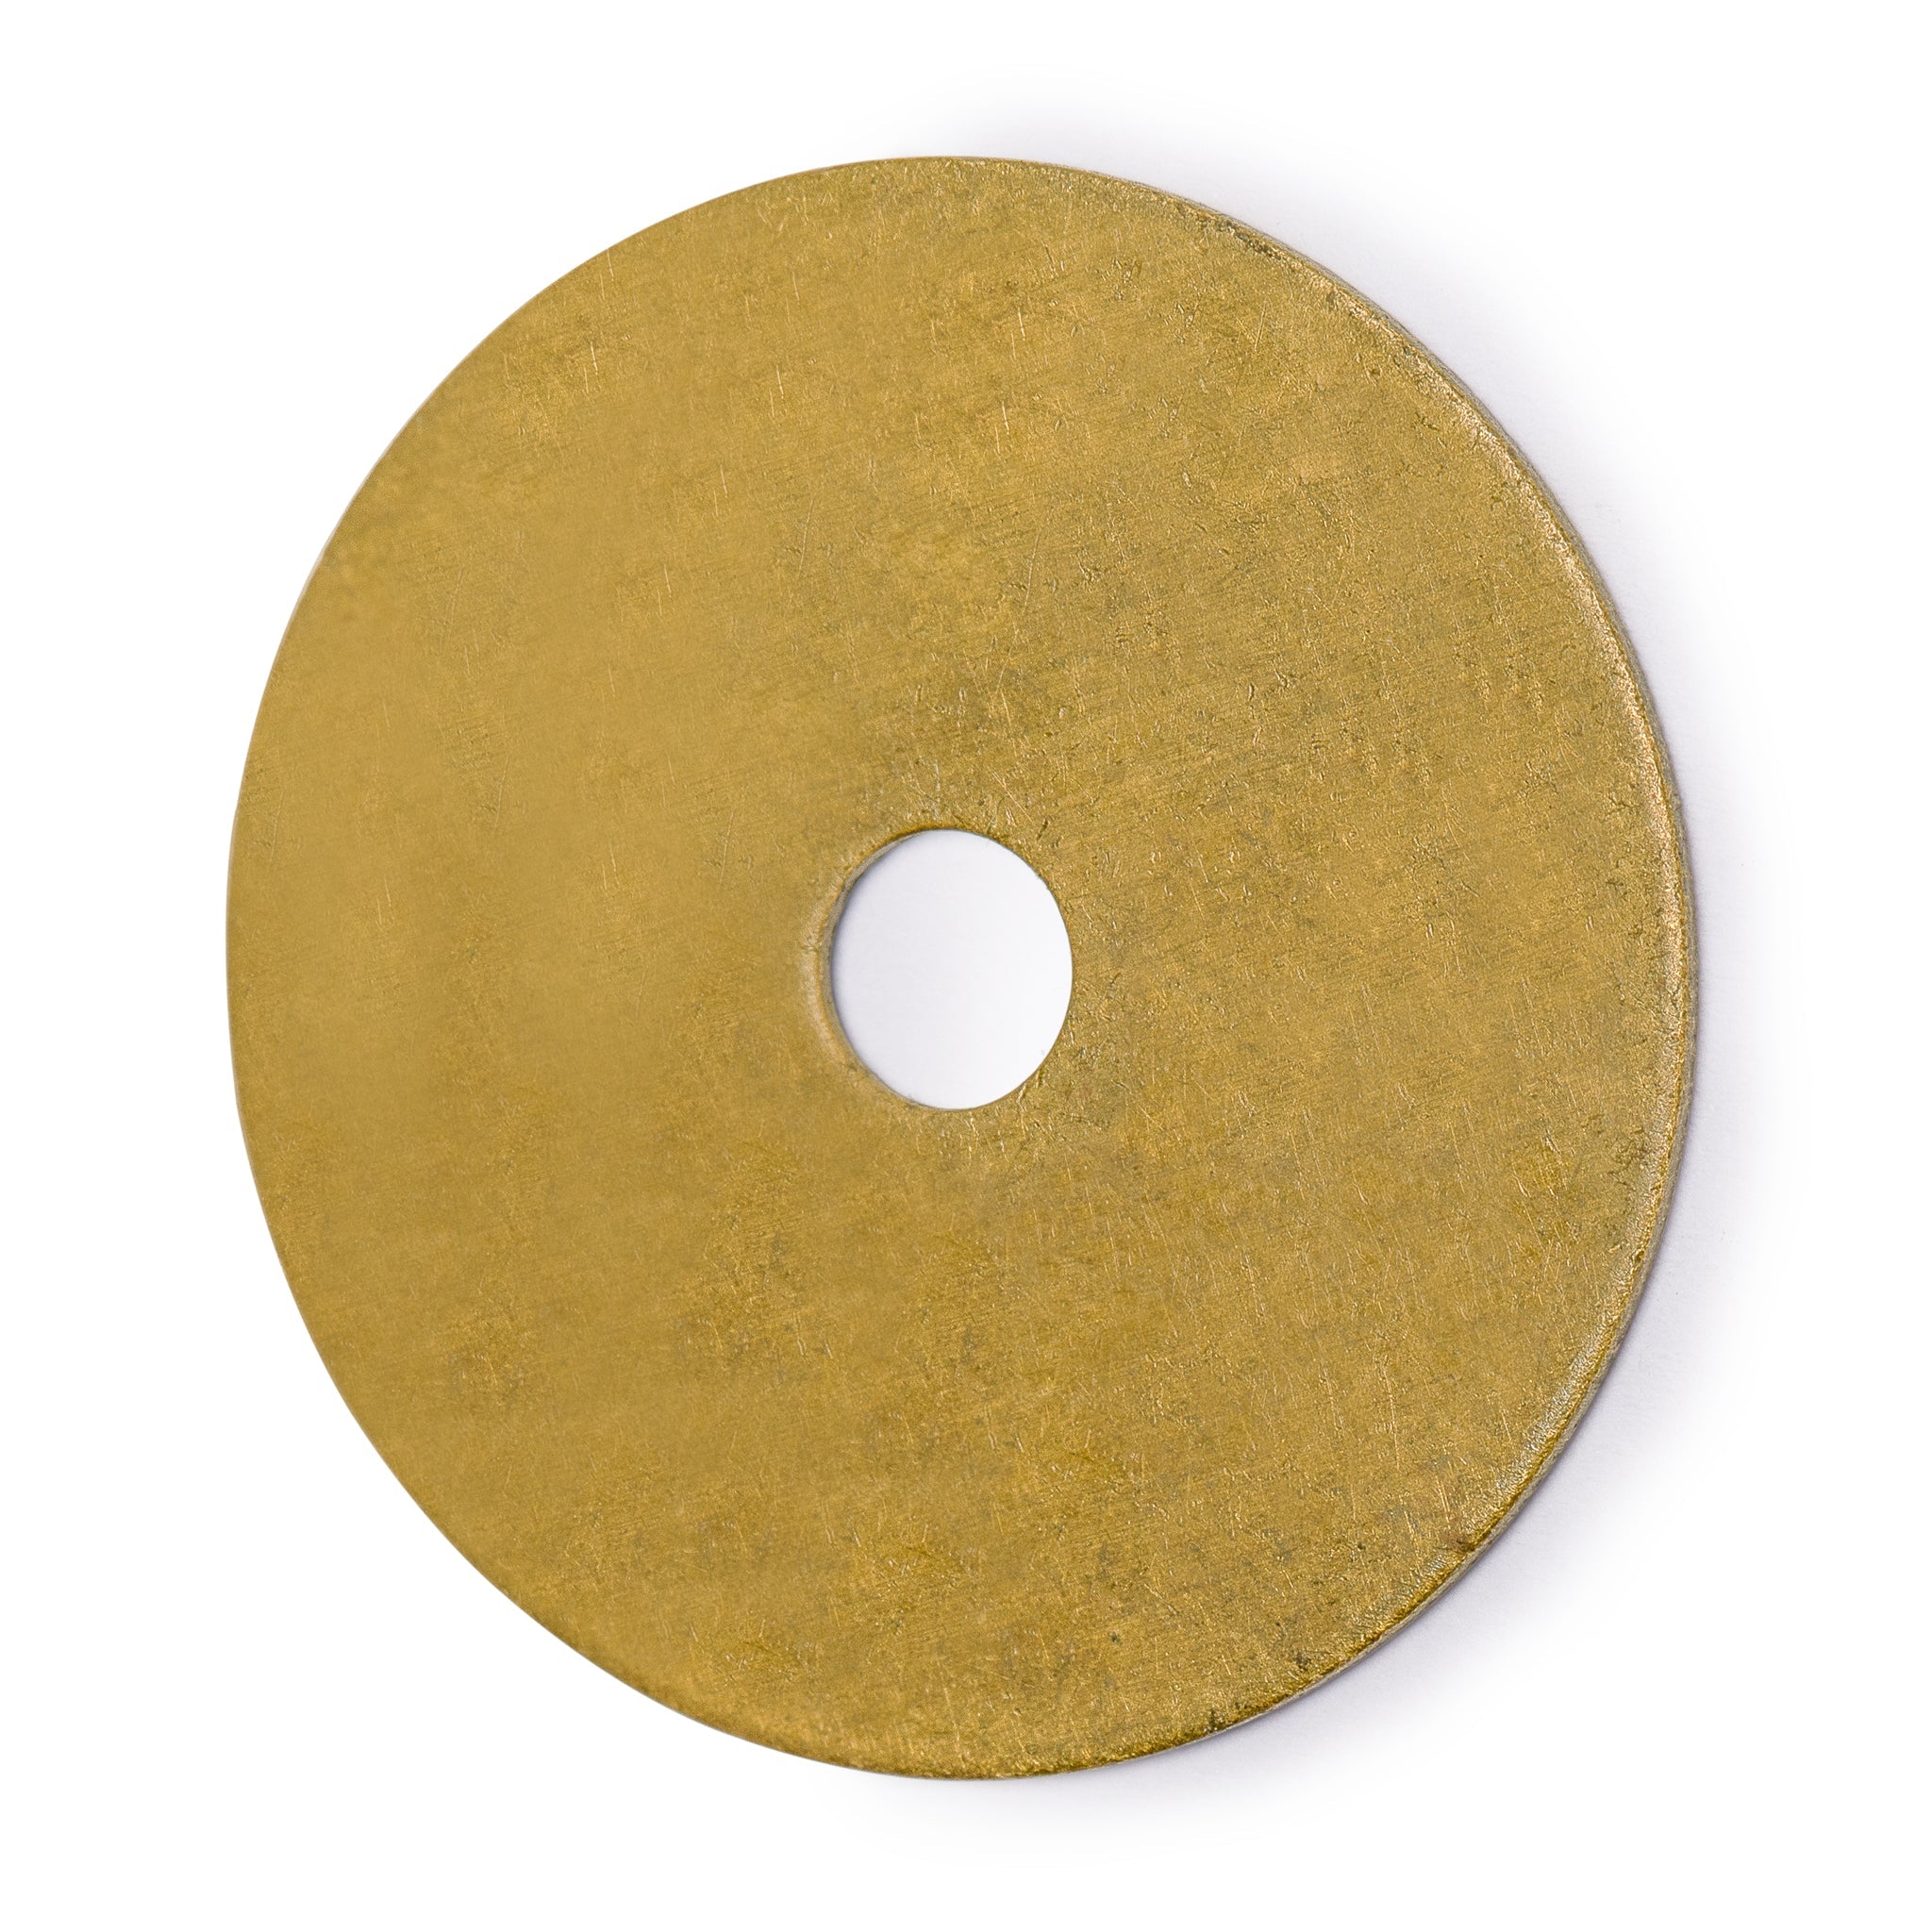 Decorative Round Washers Brass Hardware 1.4" - Set of 10-Chinese Brass Hardware